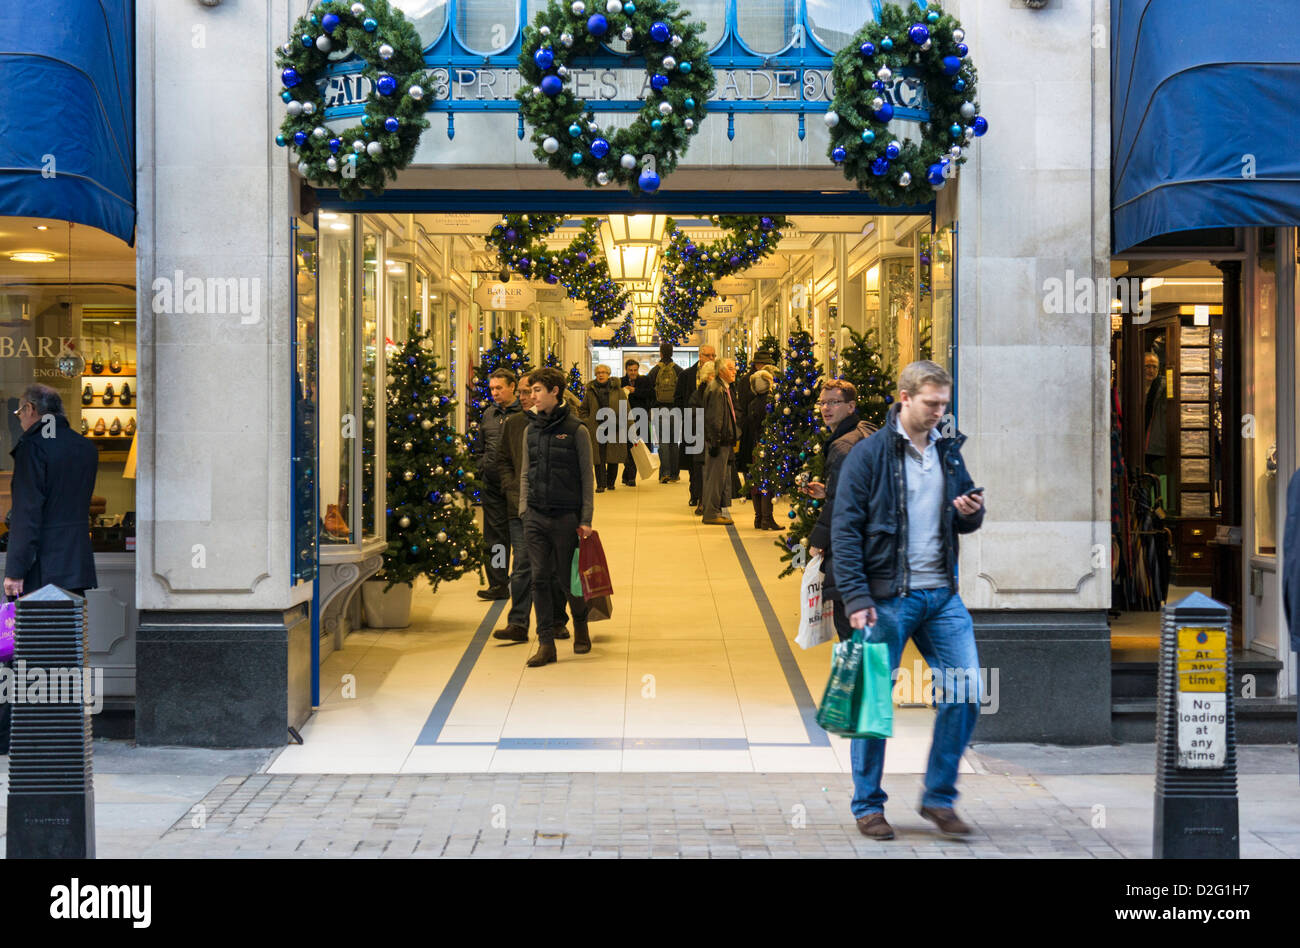 Princes Arcade, Jermyn Street, London, UK - at Christmas Stock Photo